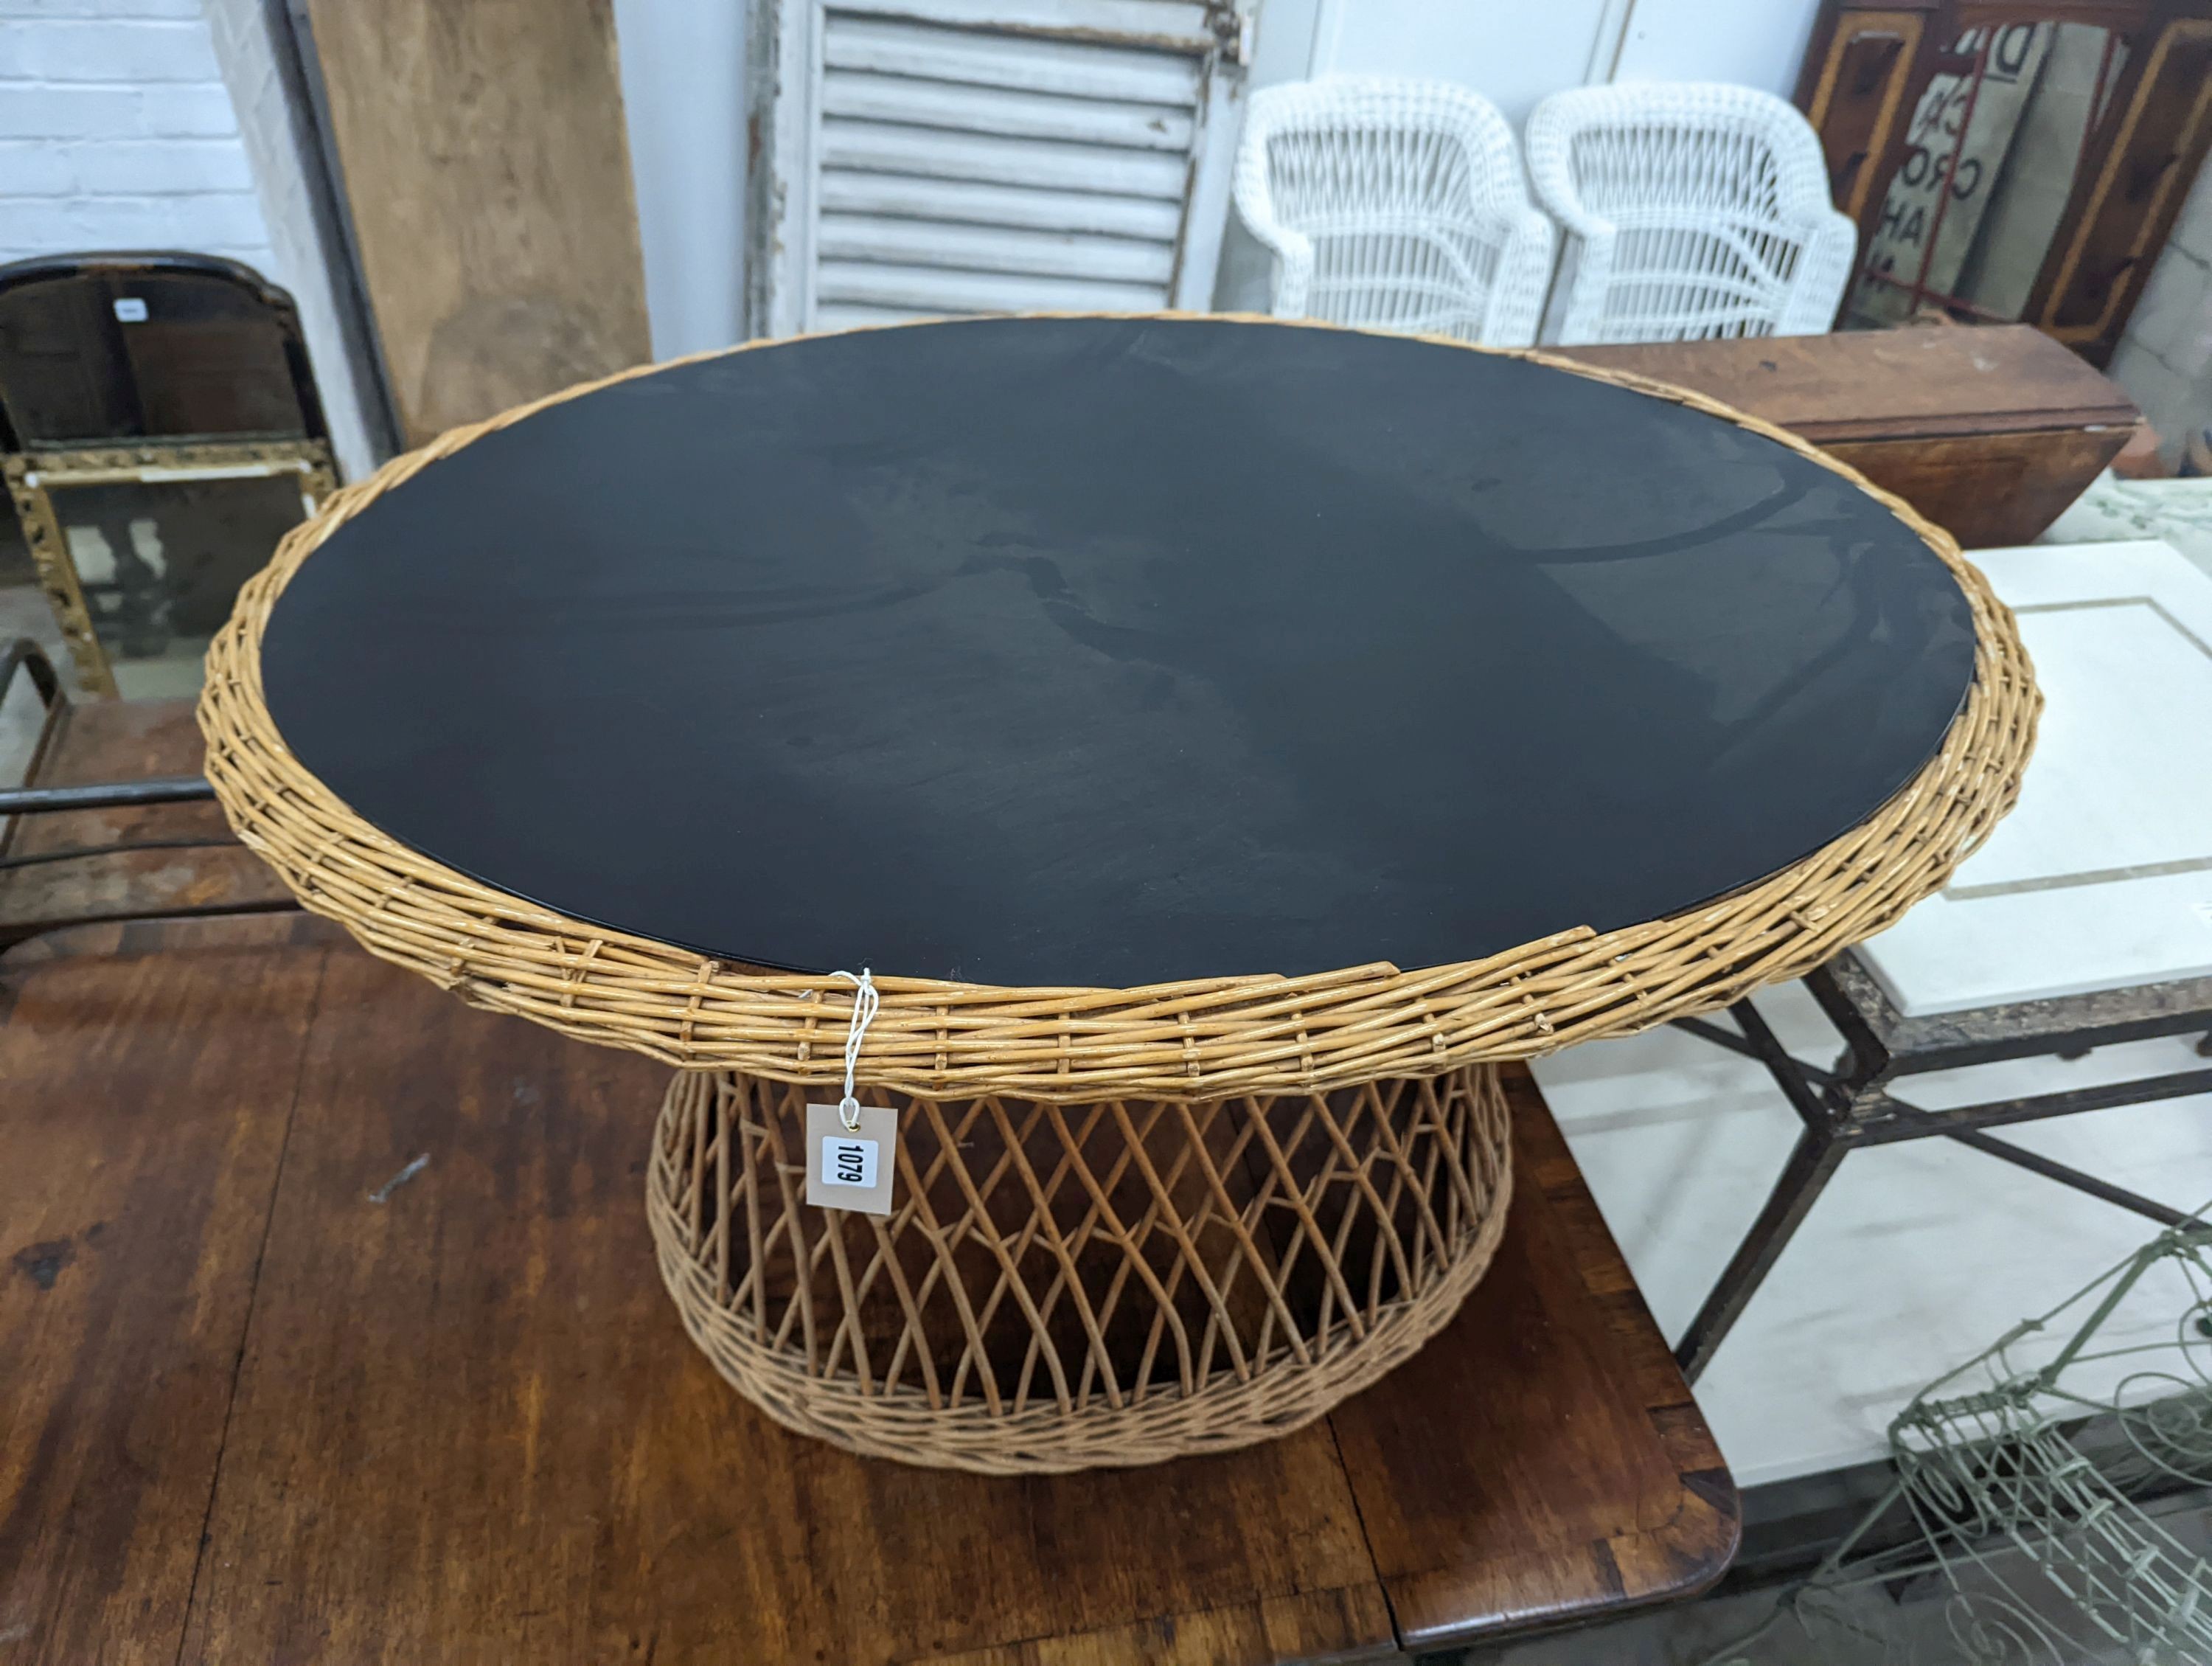 An oval rattan conservatory table, length 100cm, depth 71cm, height 60cm